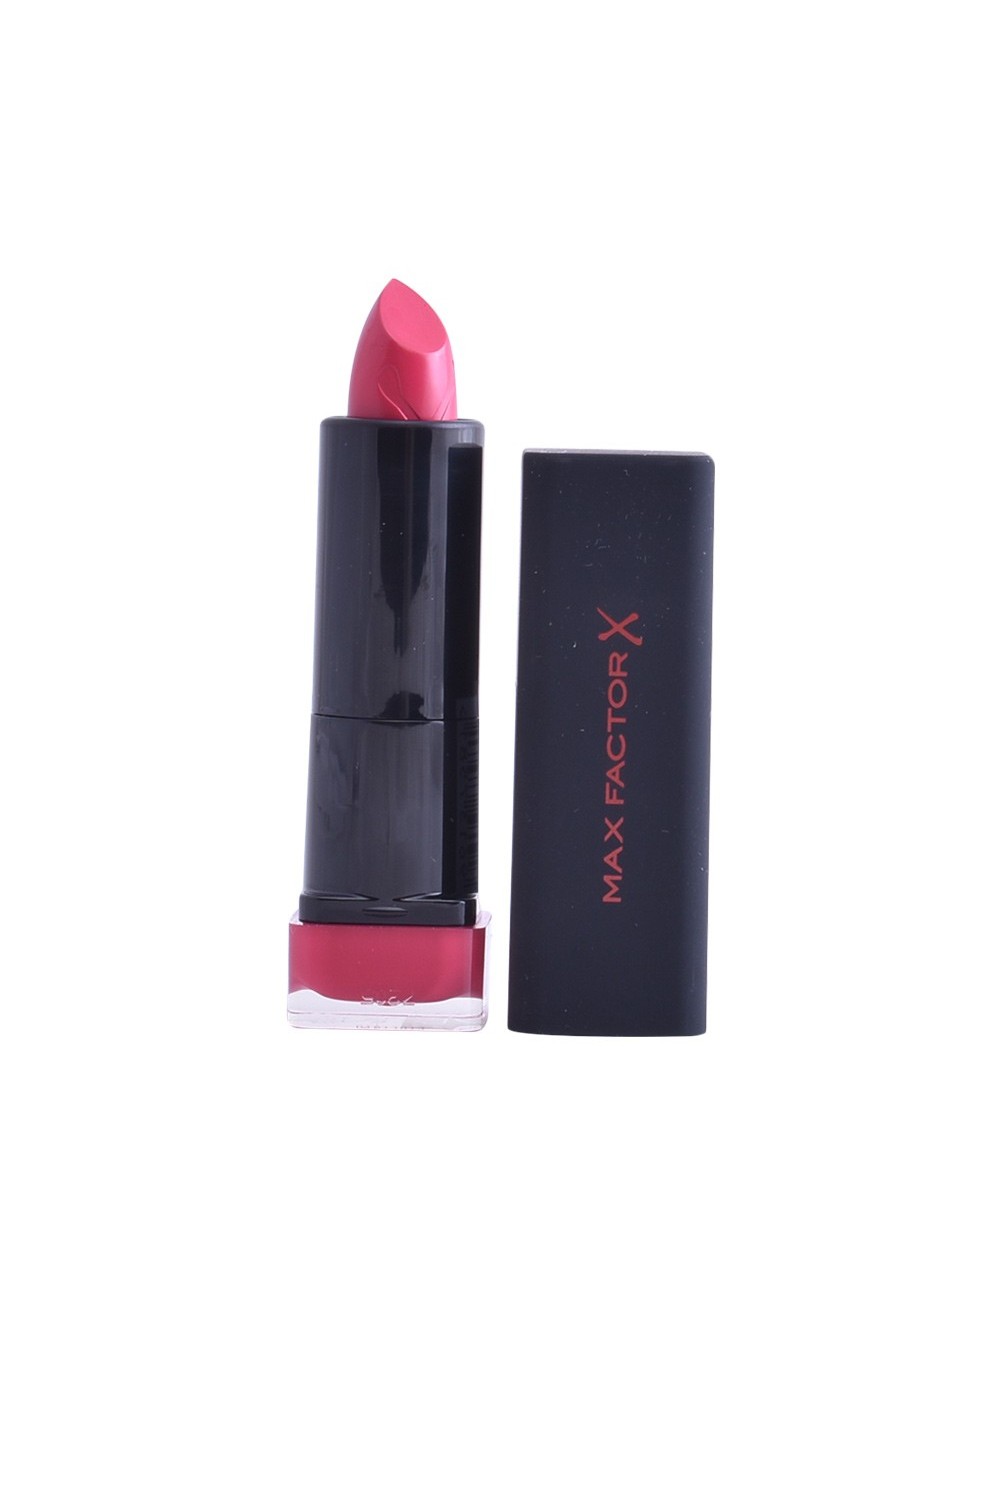 Max Factor Coulor Elixir Matte Lipstick 25 Blush